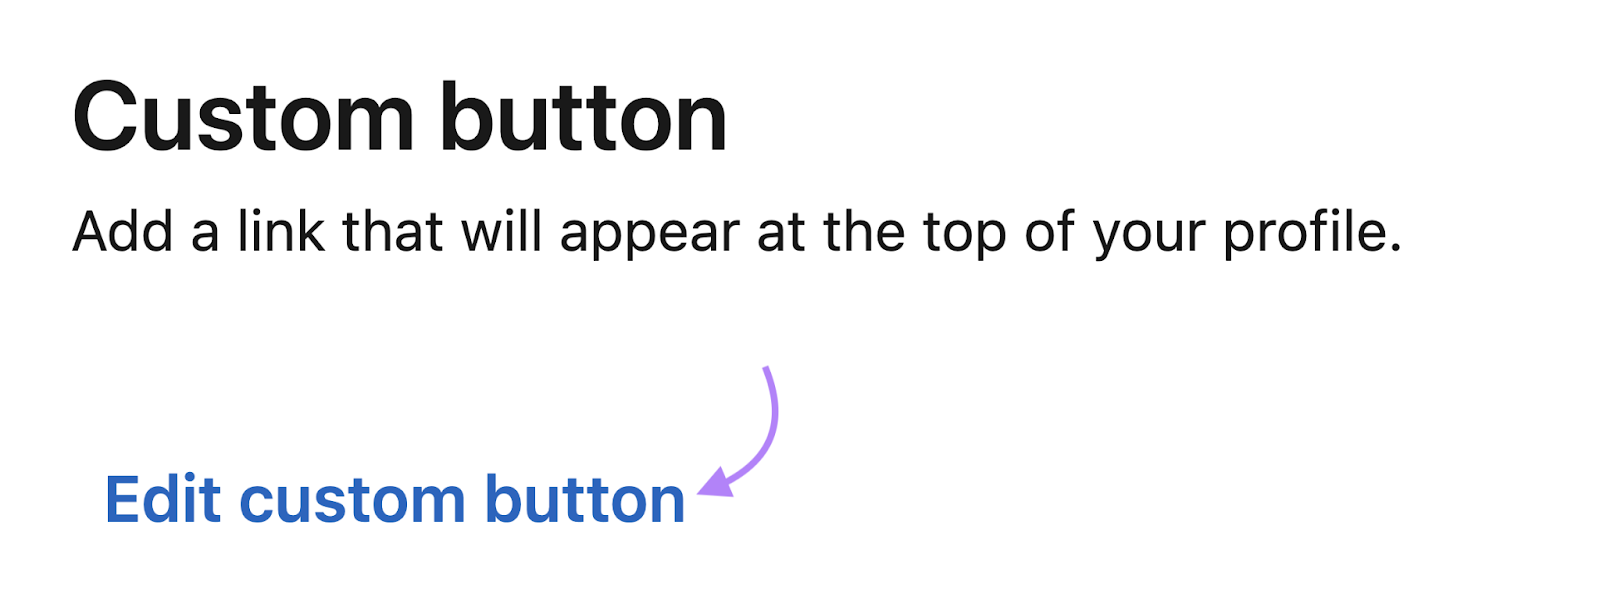 “Edit custom button" under "Custom button" section